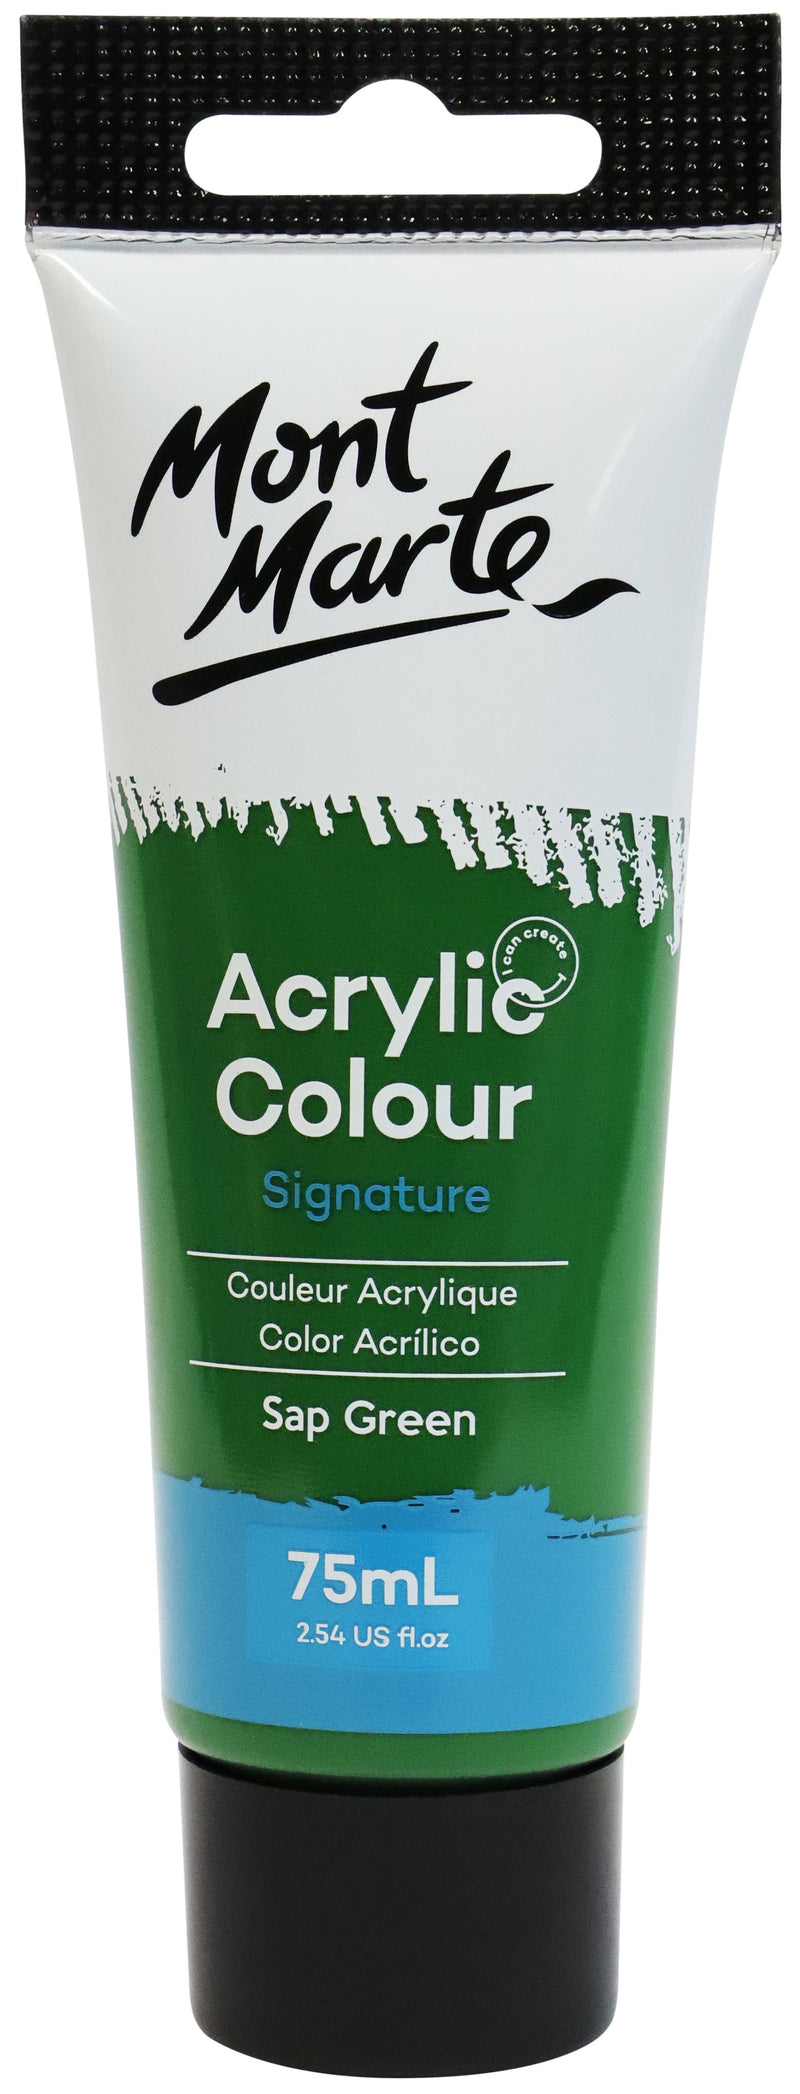 Acrylic Paint, Sap Green, Semi-Matte, 75ml, pnt0173